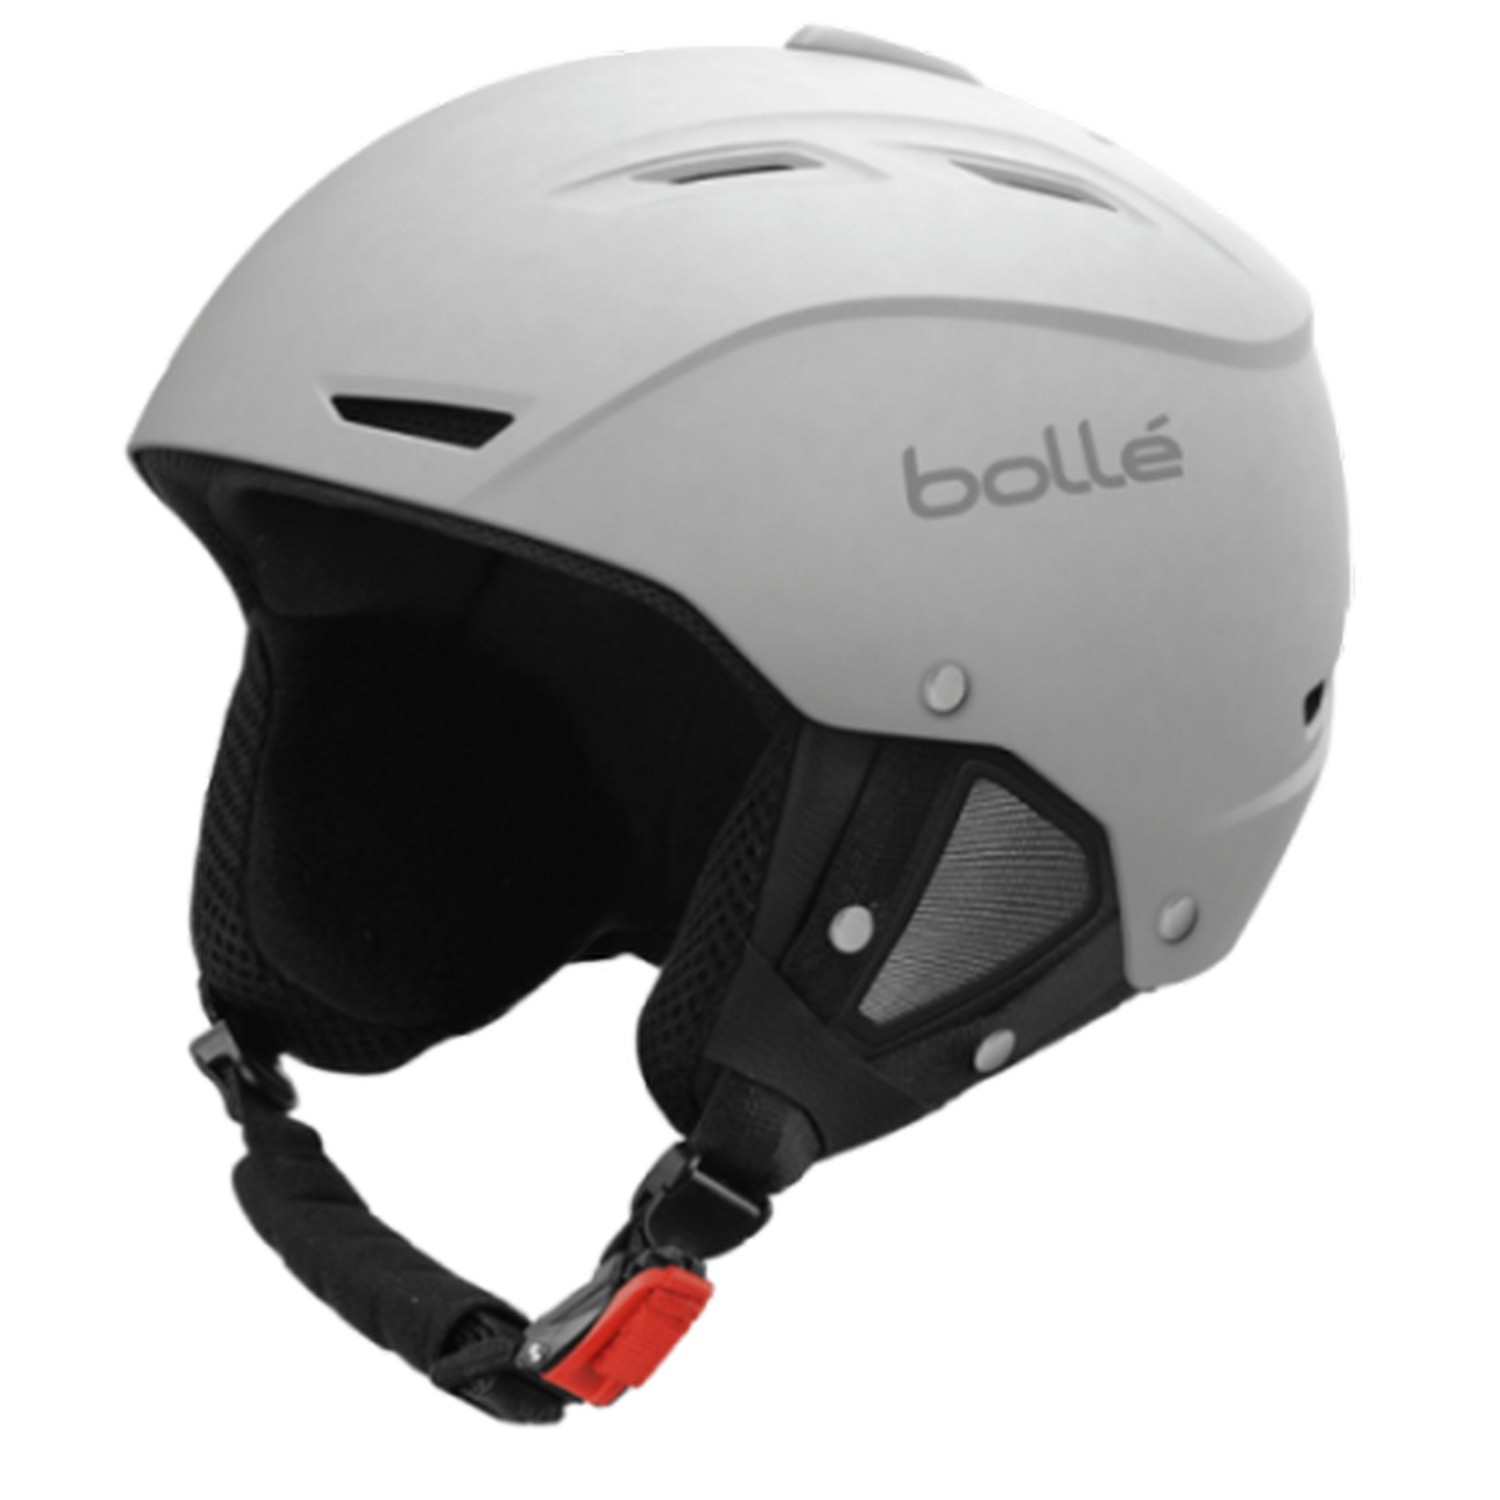 Мужской шлем для сноуборда Bolle Backline SOFT White